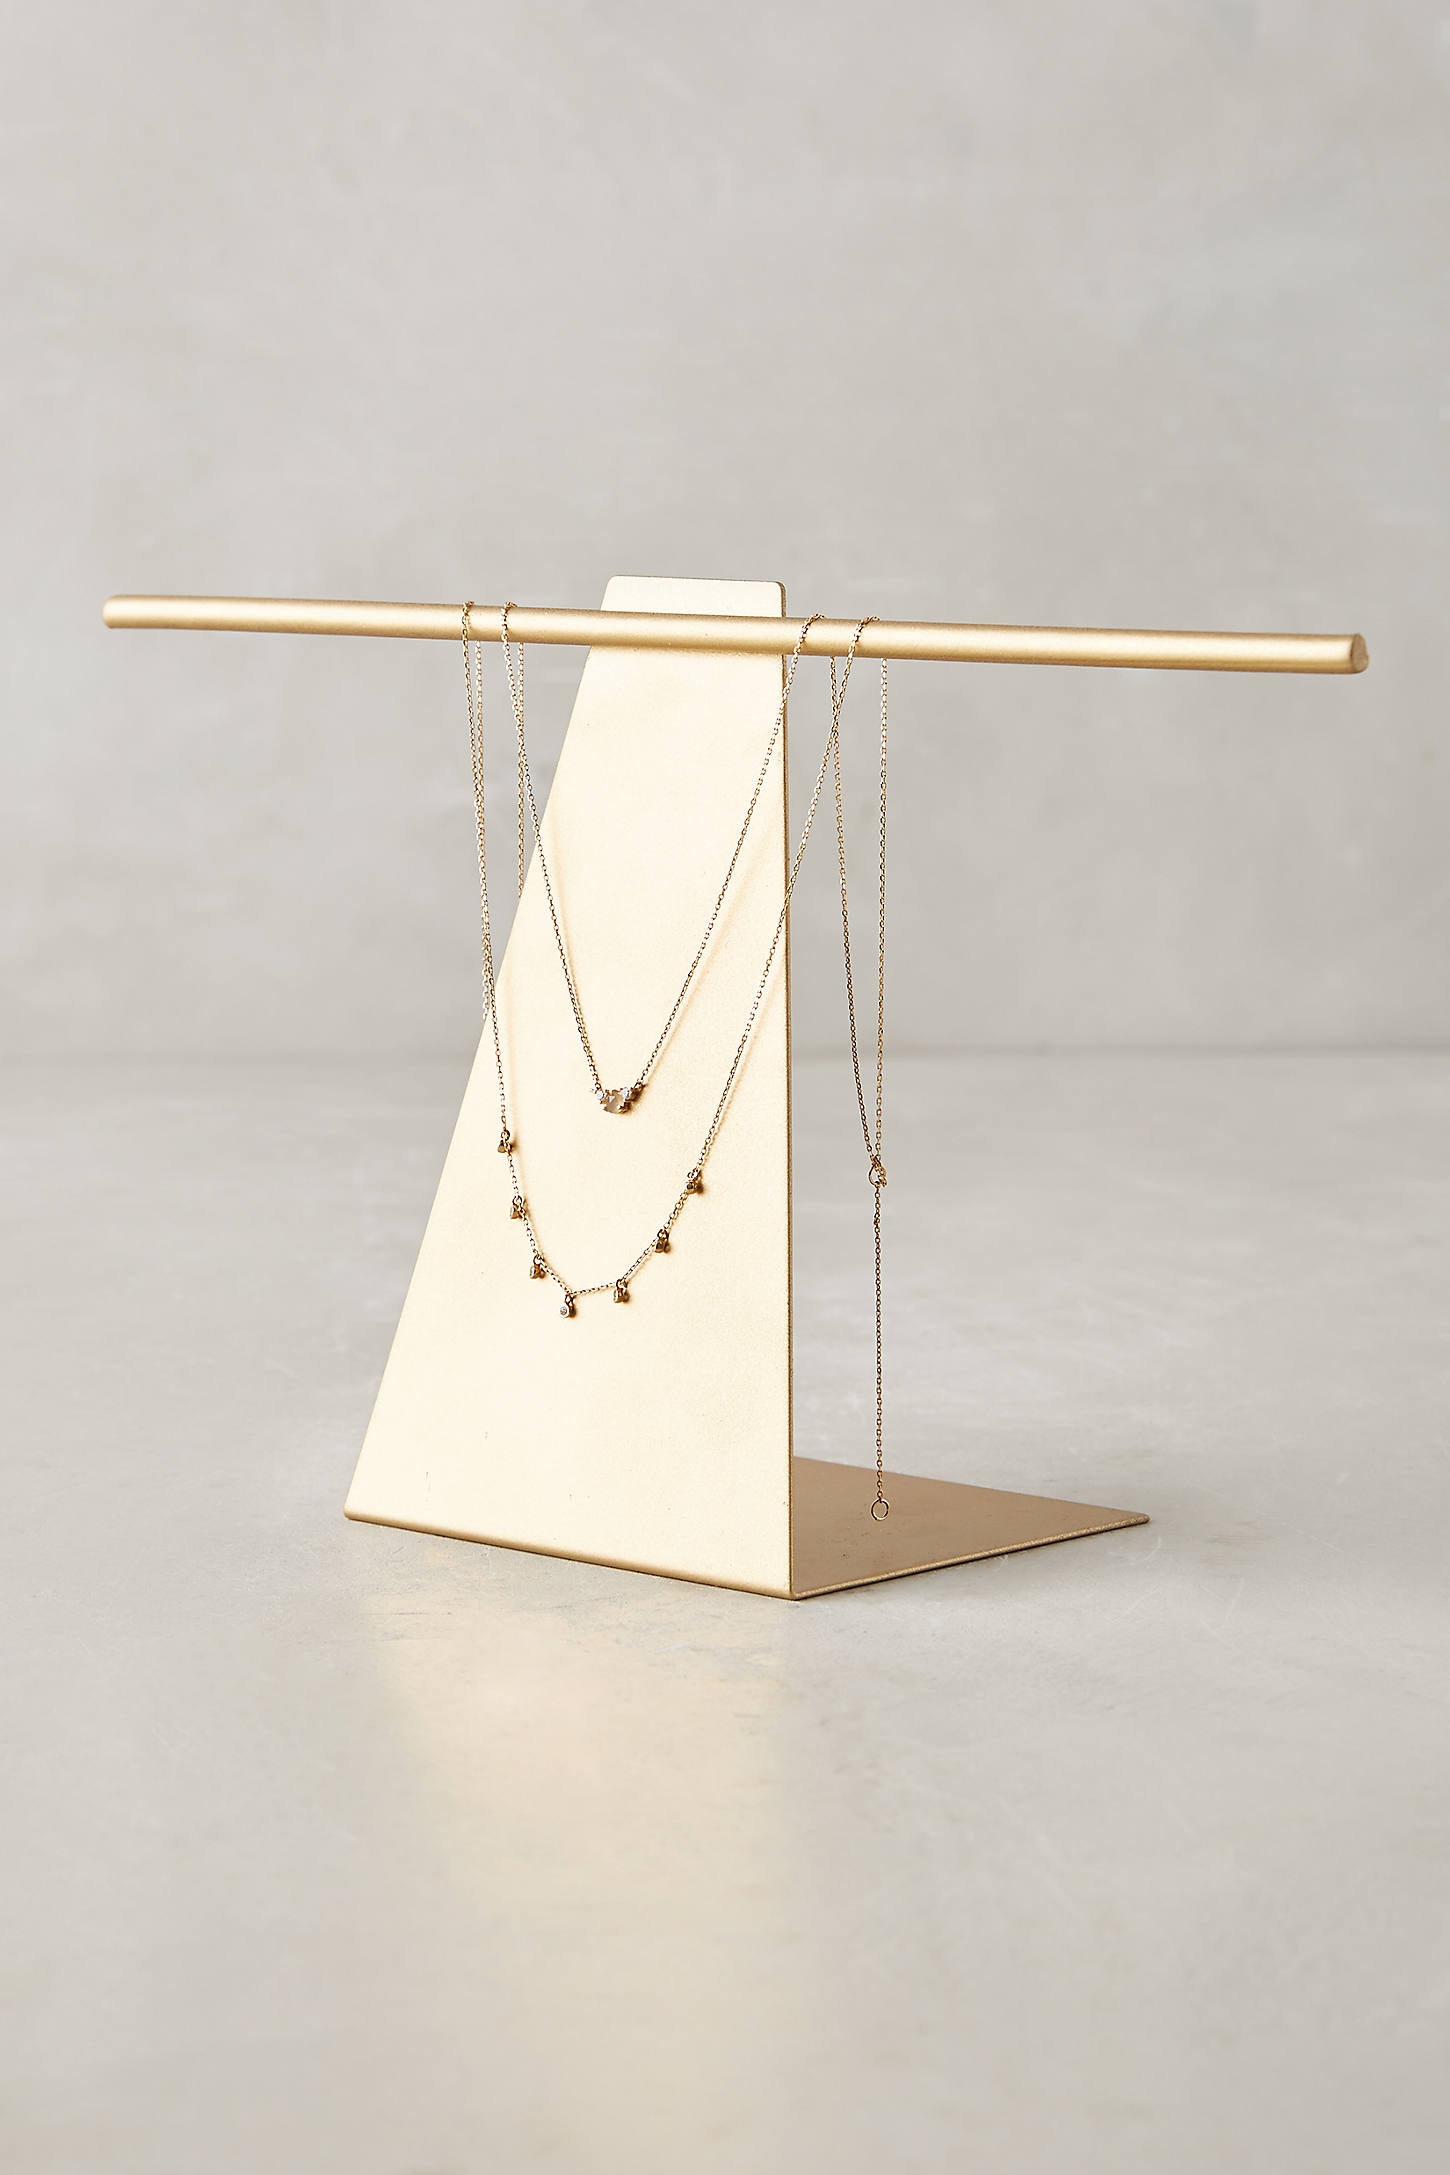 Metronome Jewelry Stand - Image 0